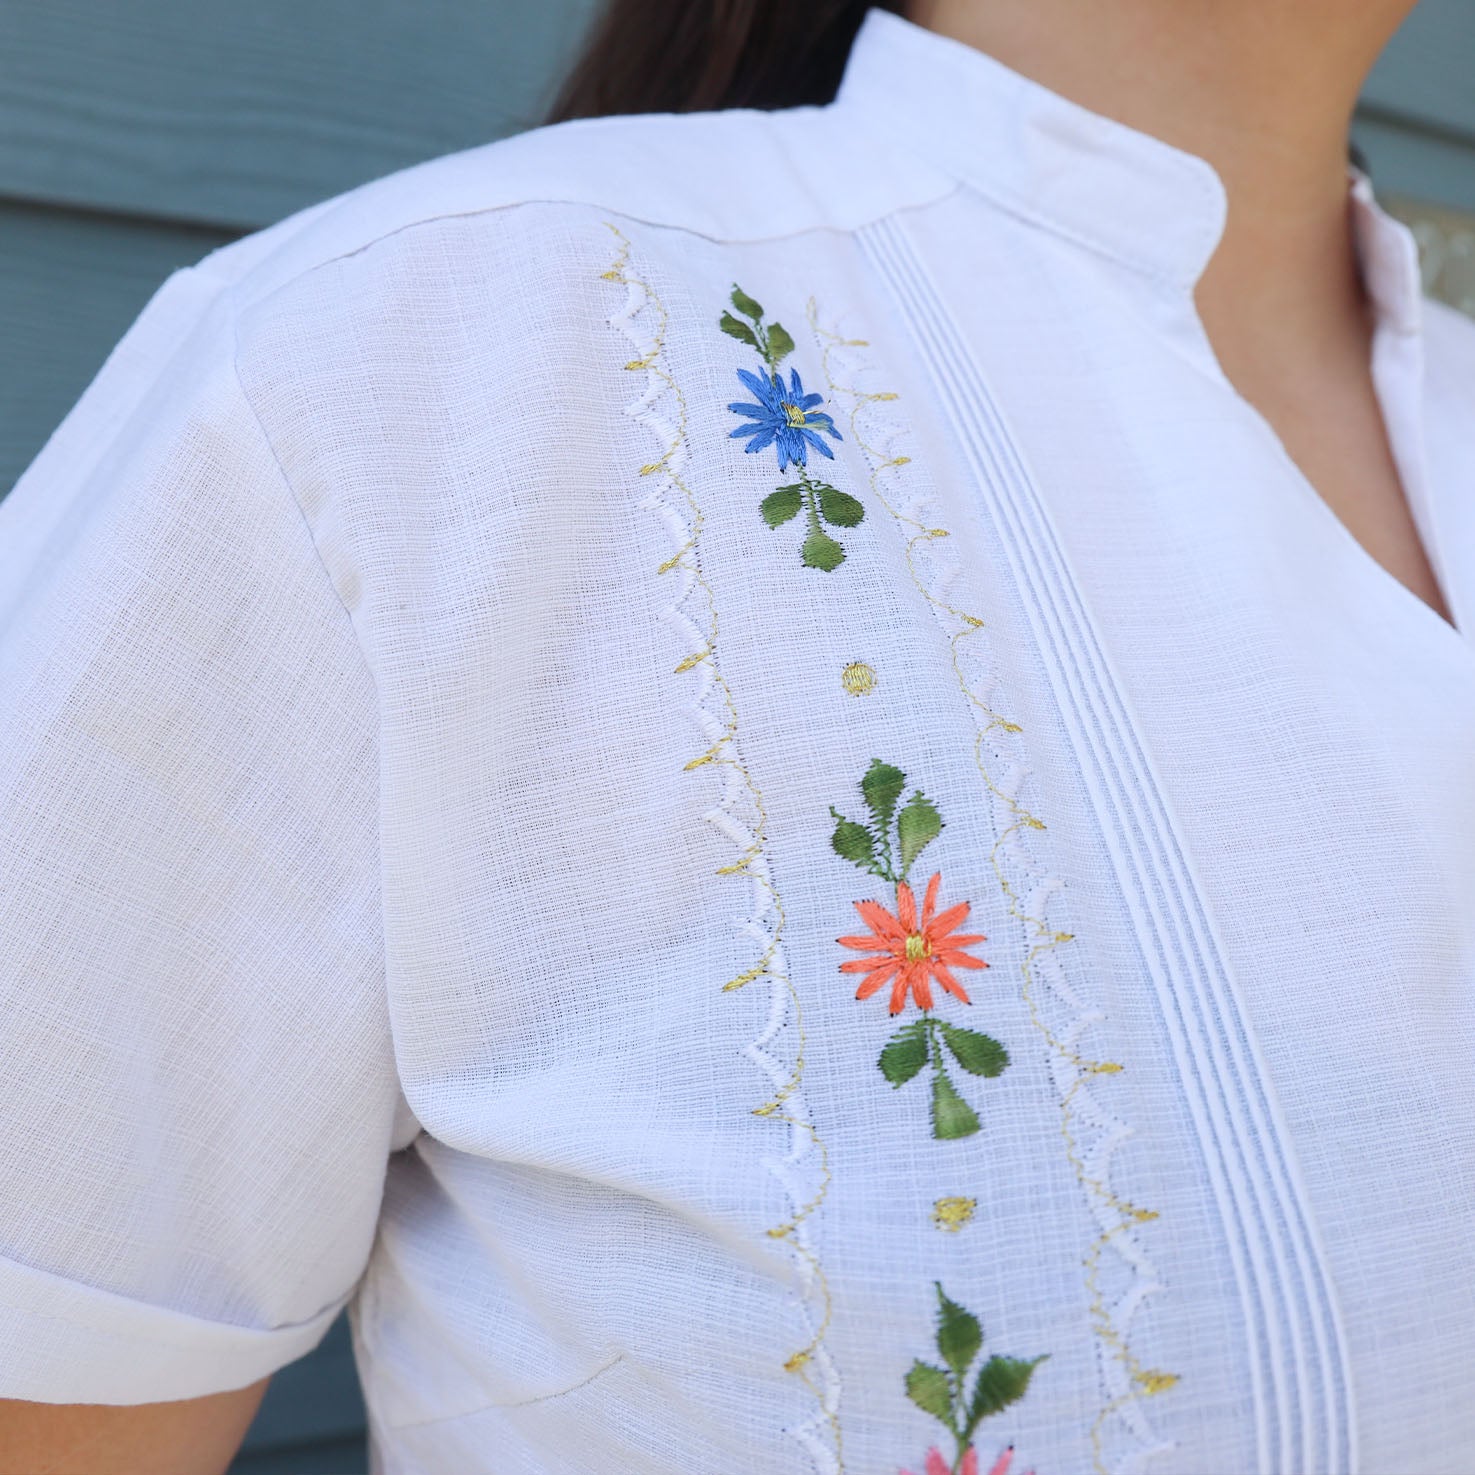 Blanca Short Sleeve Embroidered Woman Guayabera